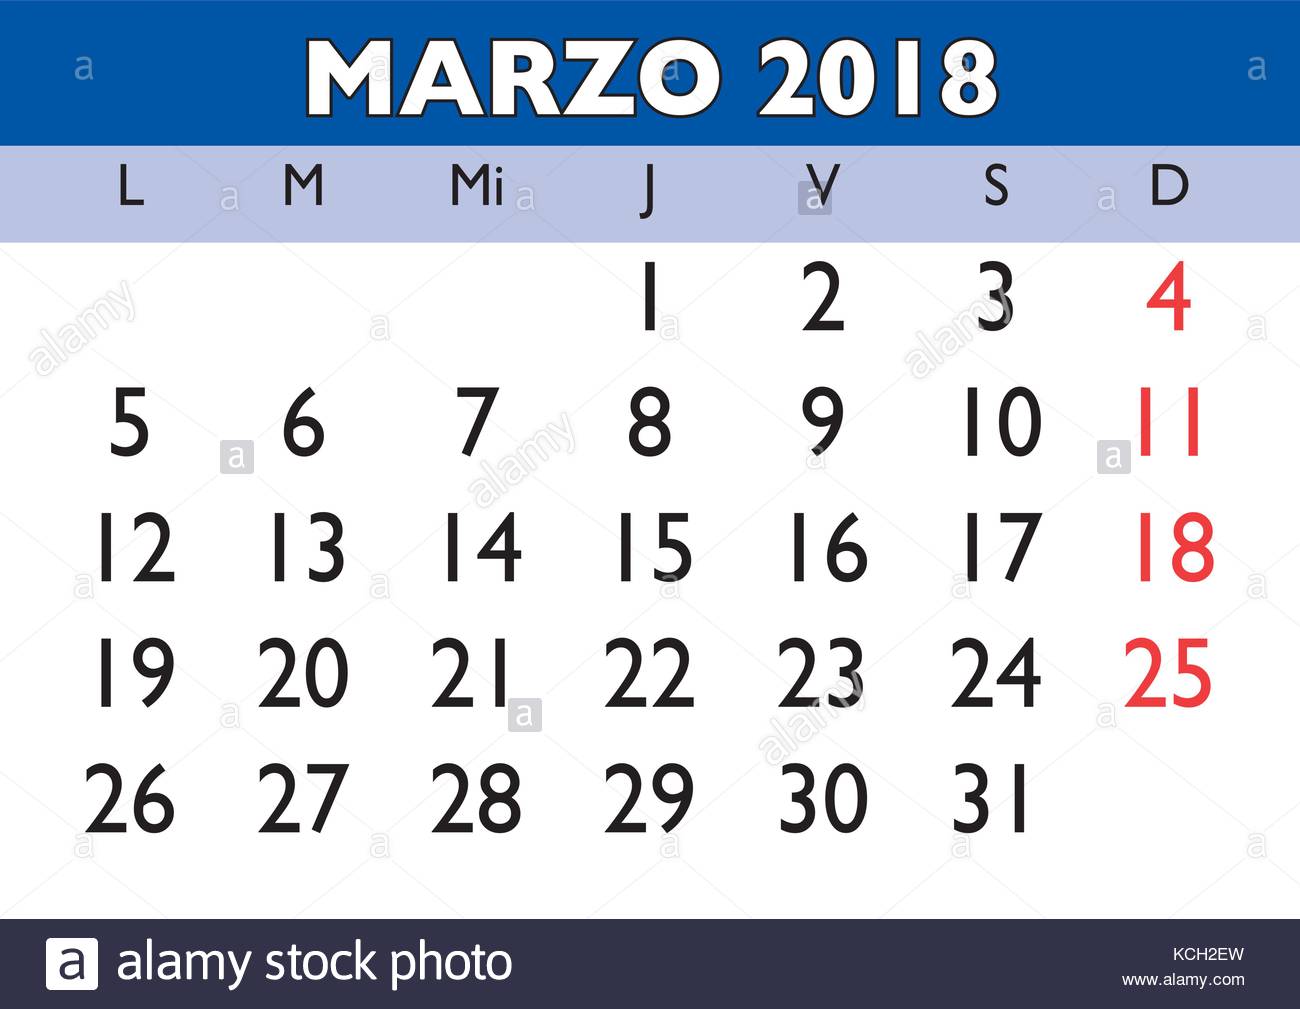 march month in a year 2018 wall calendar in spanish marzo 2018 calendario KCH2EW